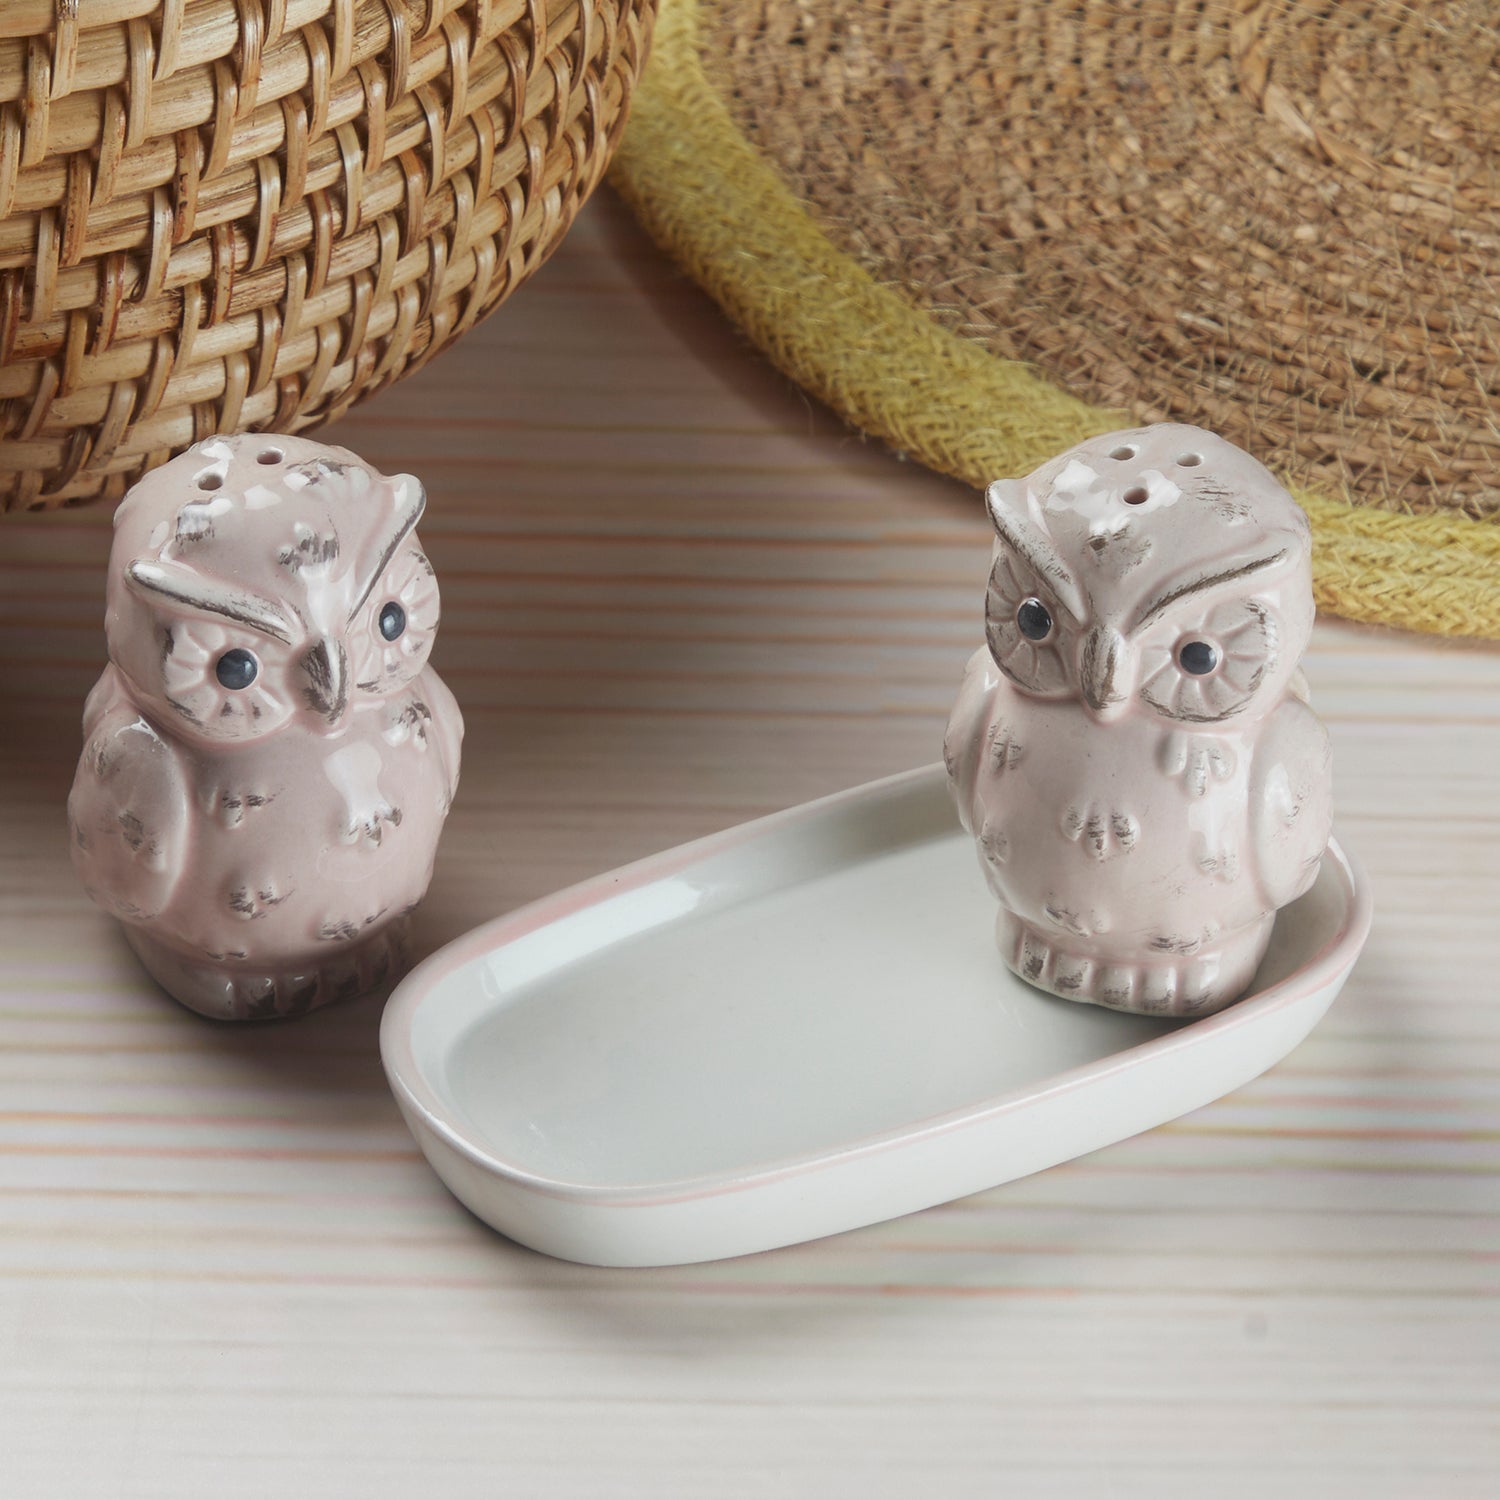 Ceramic Salt and Pepper Set with tray, Owl Design, White (10283)